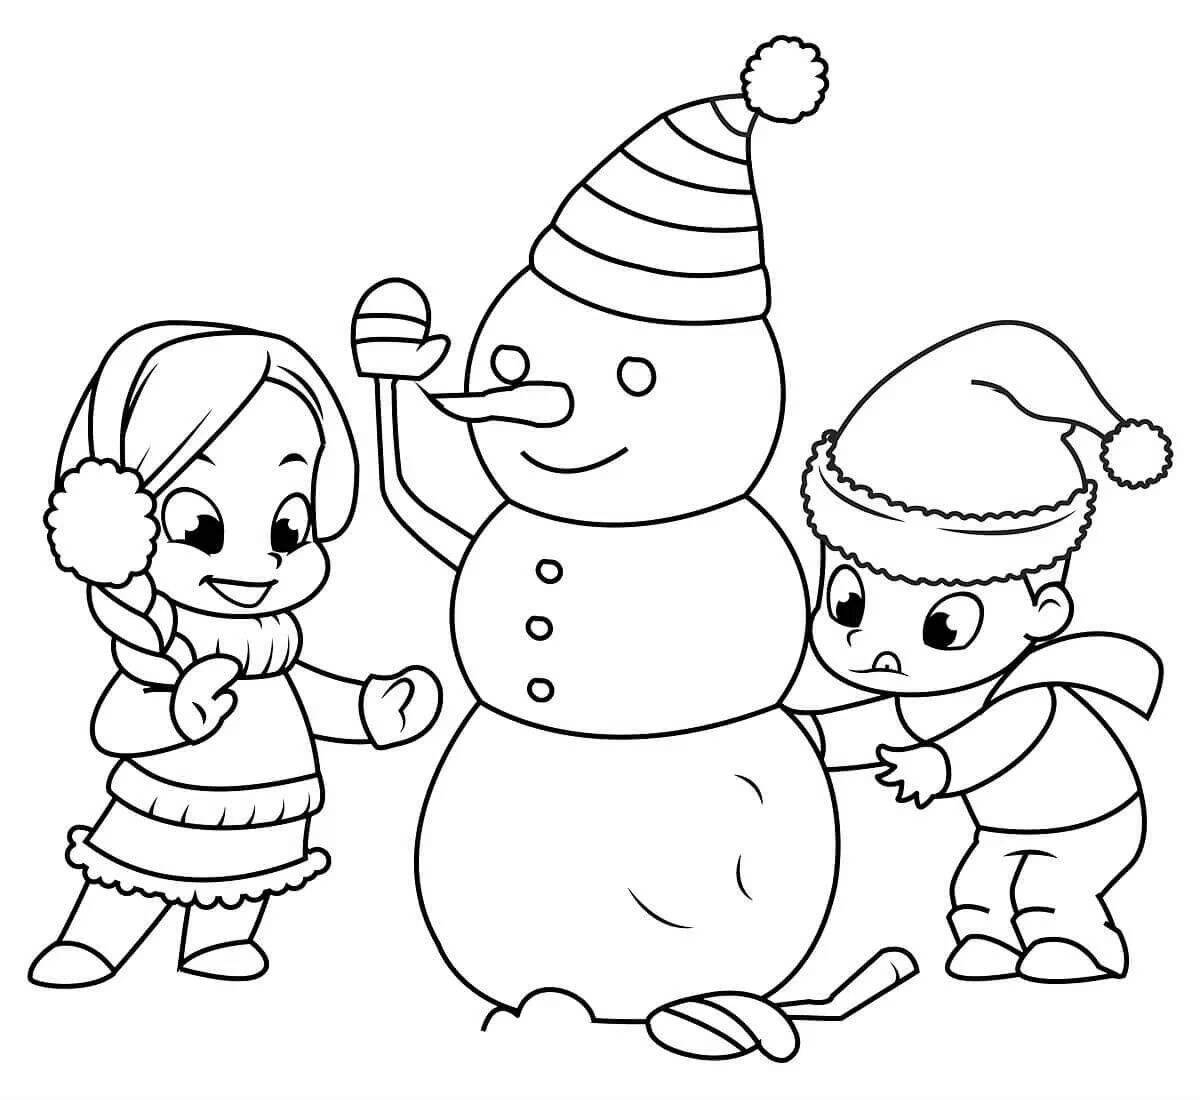 Coloring book birthday cheerful snowman